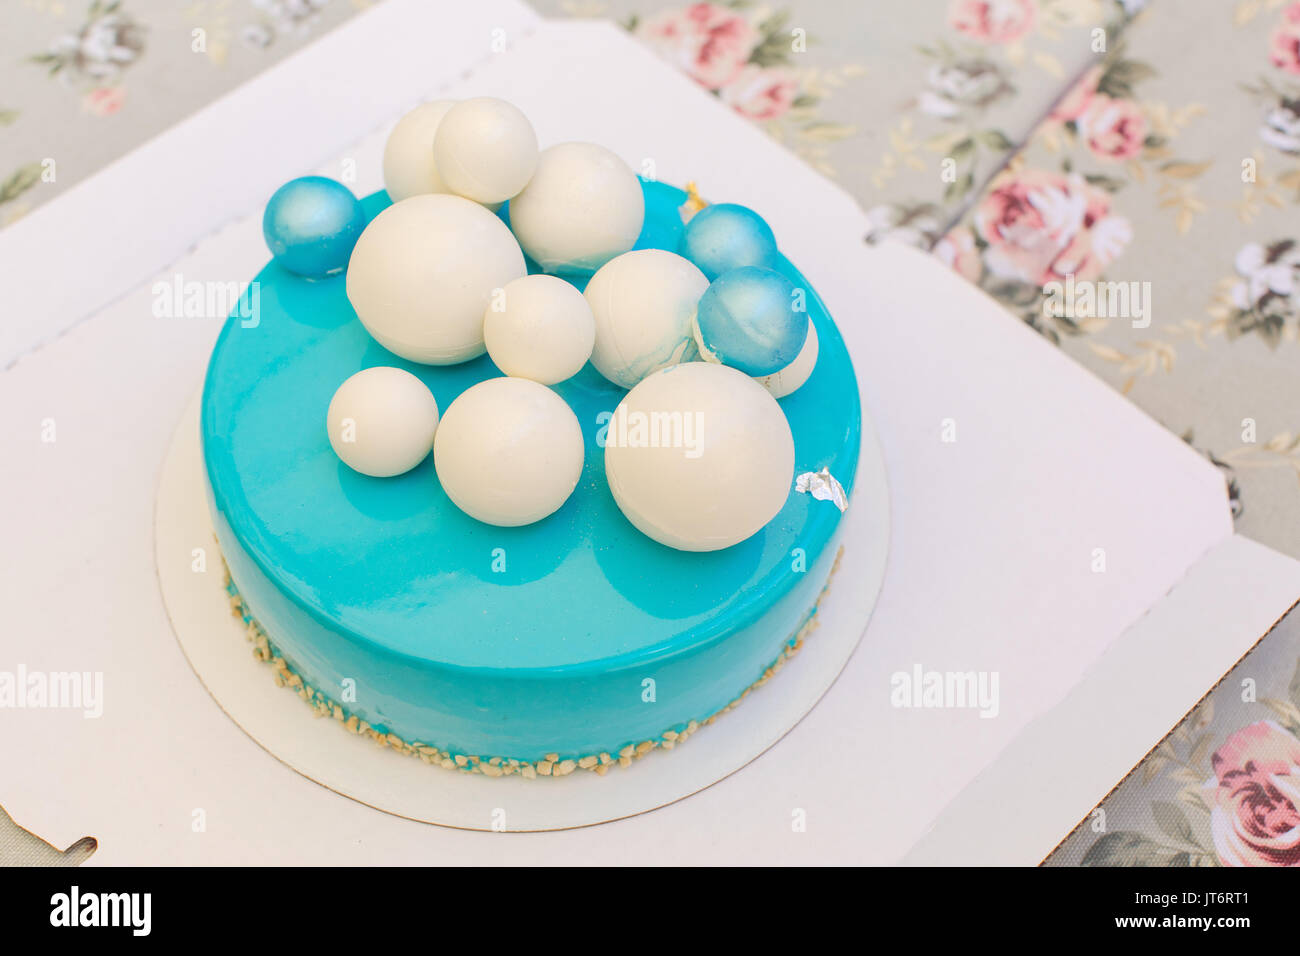 Cake with beautiful creative decor Stock Photo